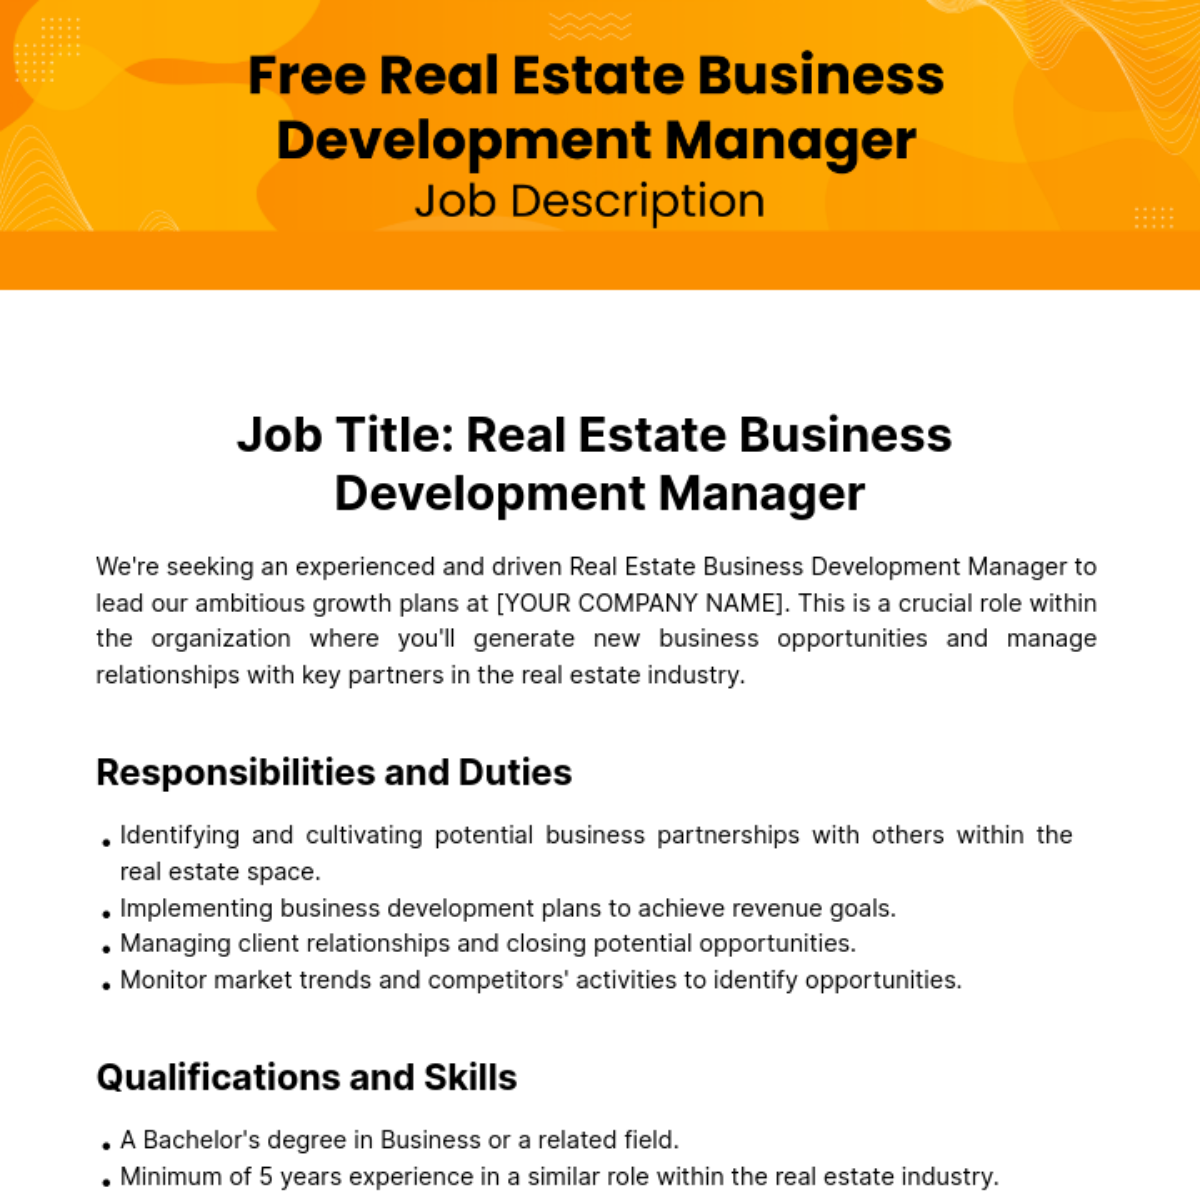 Real Estate Business Development Manager Job Description Template